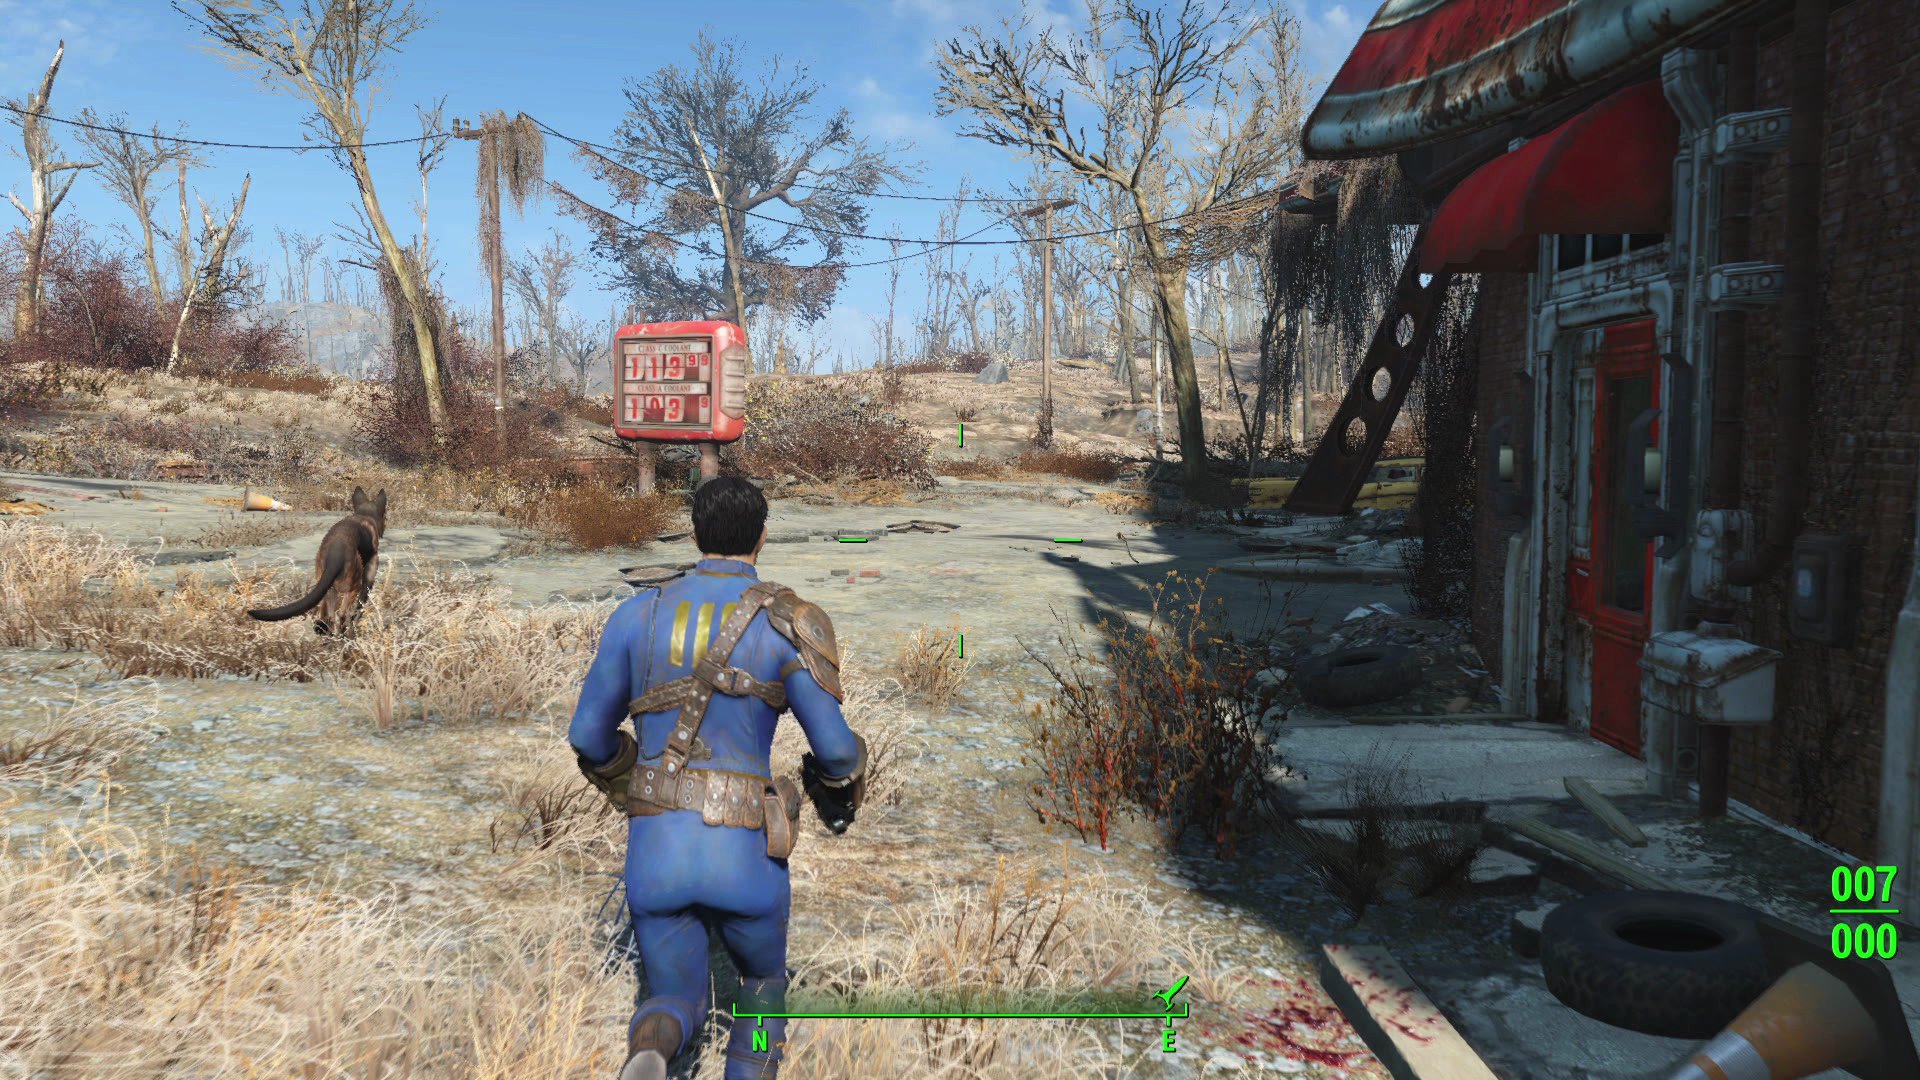 Fallout 4 (PS4 / PlayStation 4) Game Profile | News ... - 1920 x 1080 jpeg 499kB